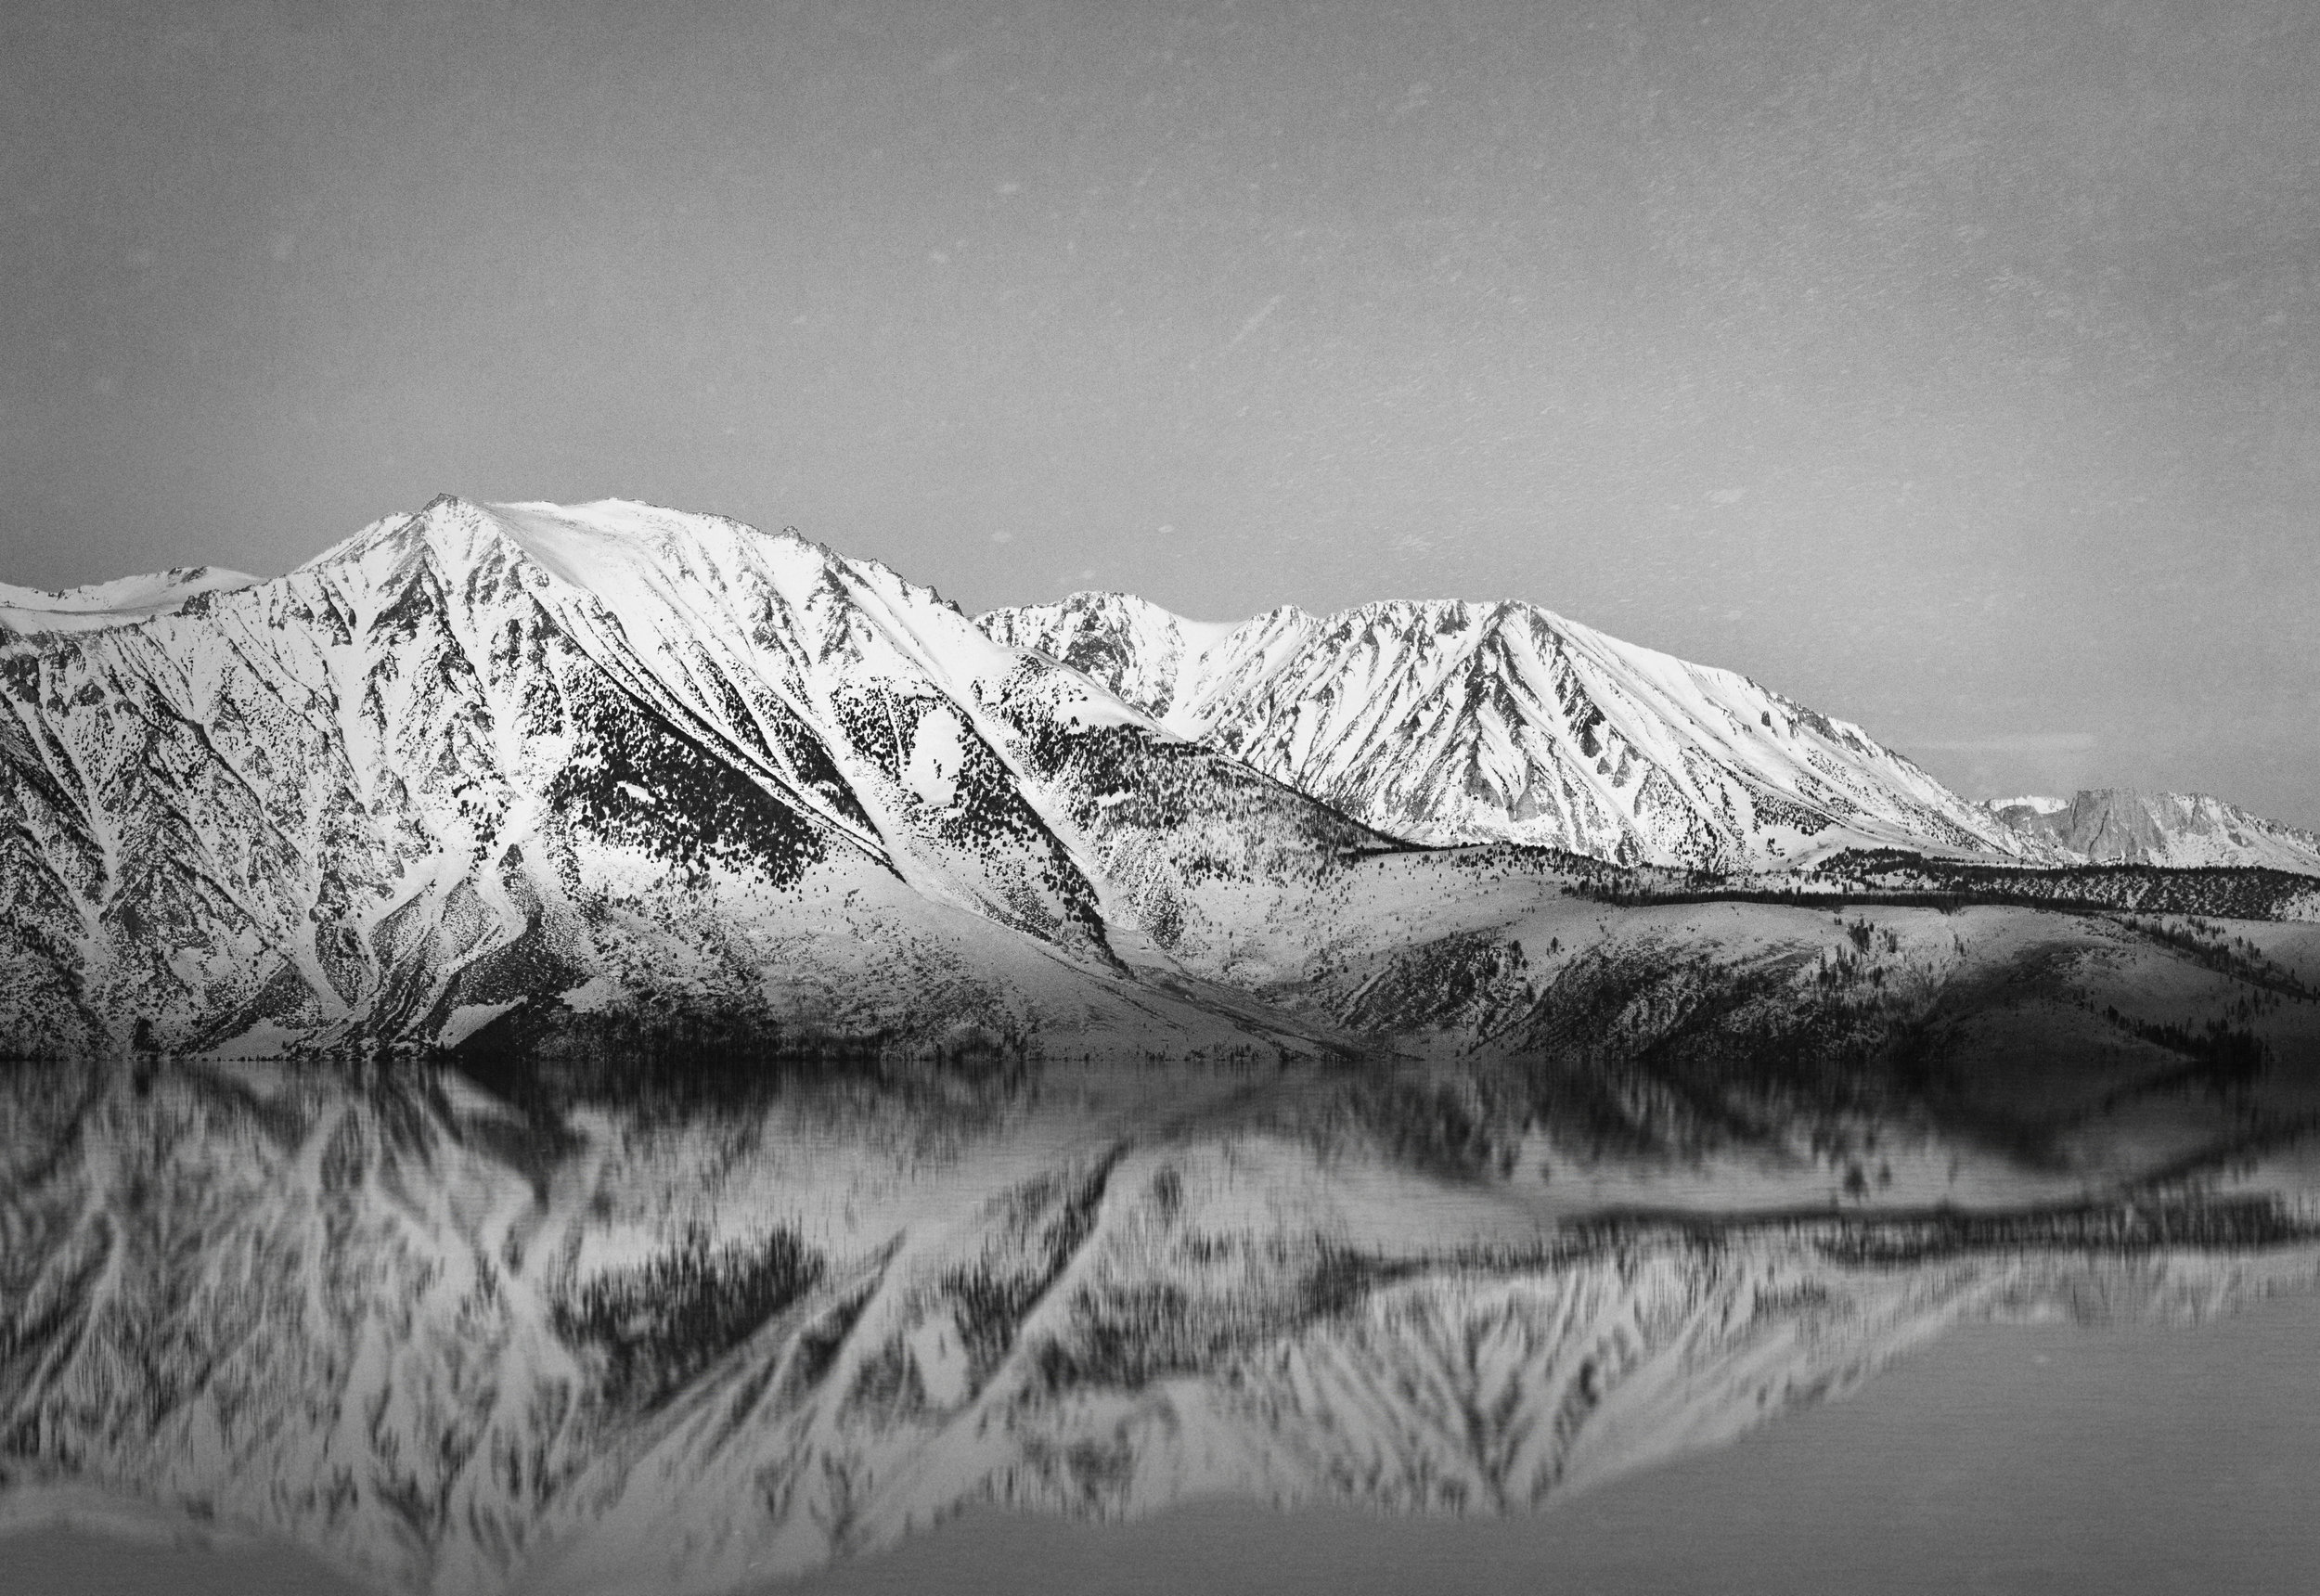 BW Mountains Reflection.jpg